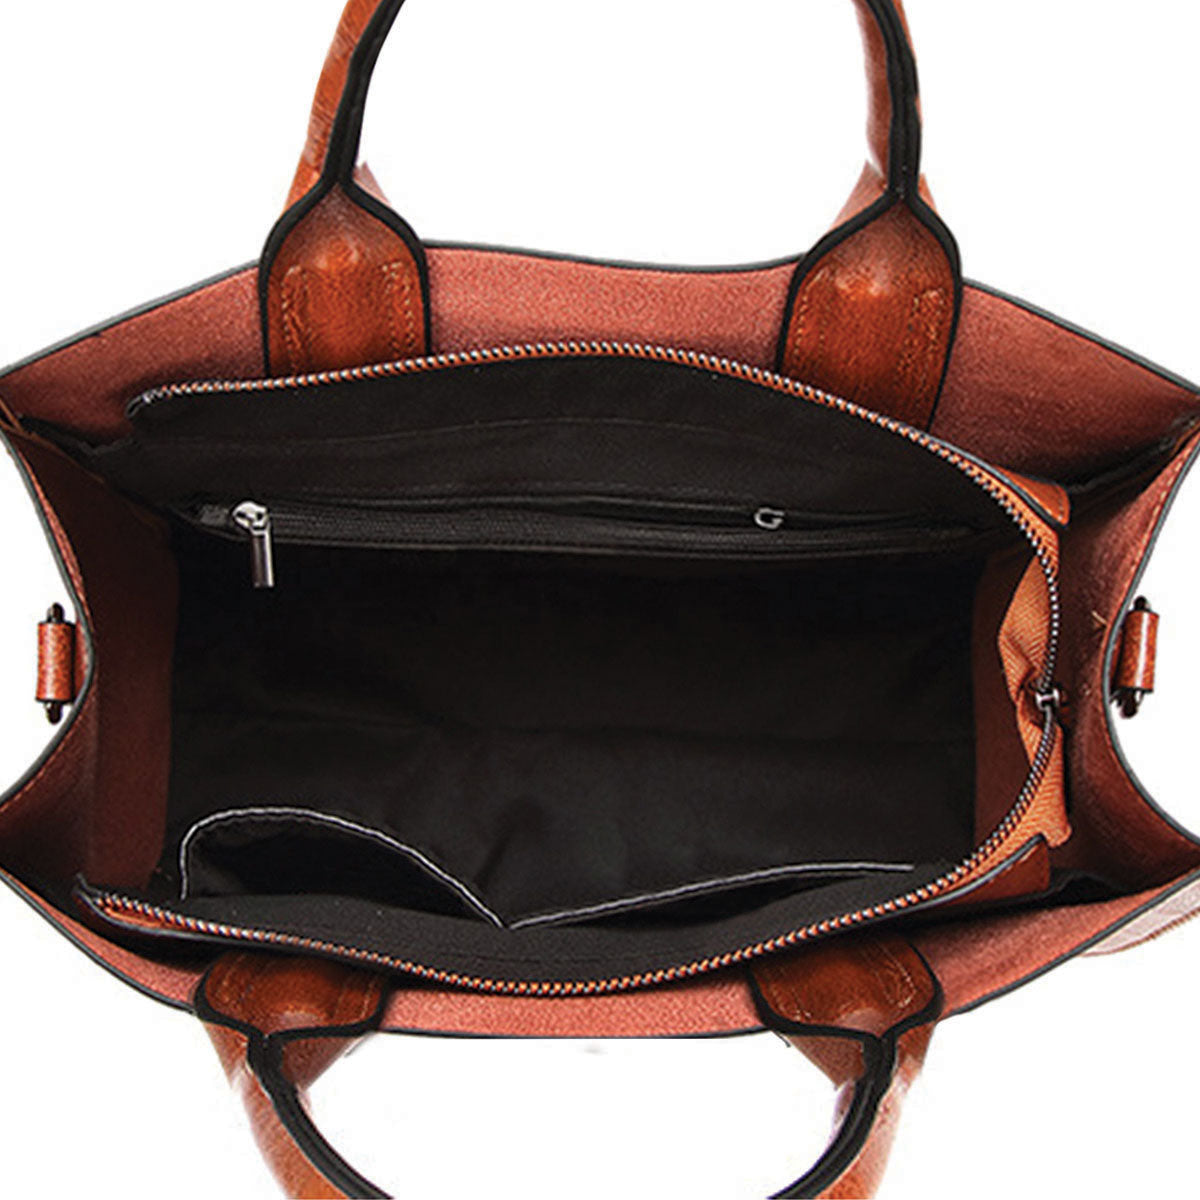 Your Best Companion - Pomeranian Luxury Handbag V4